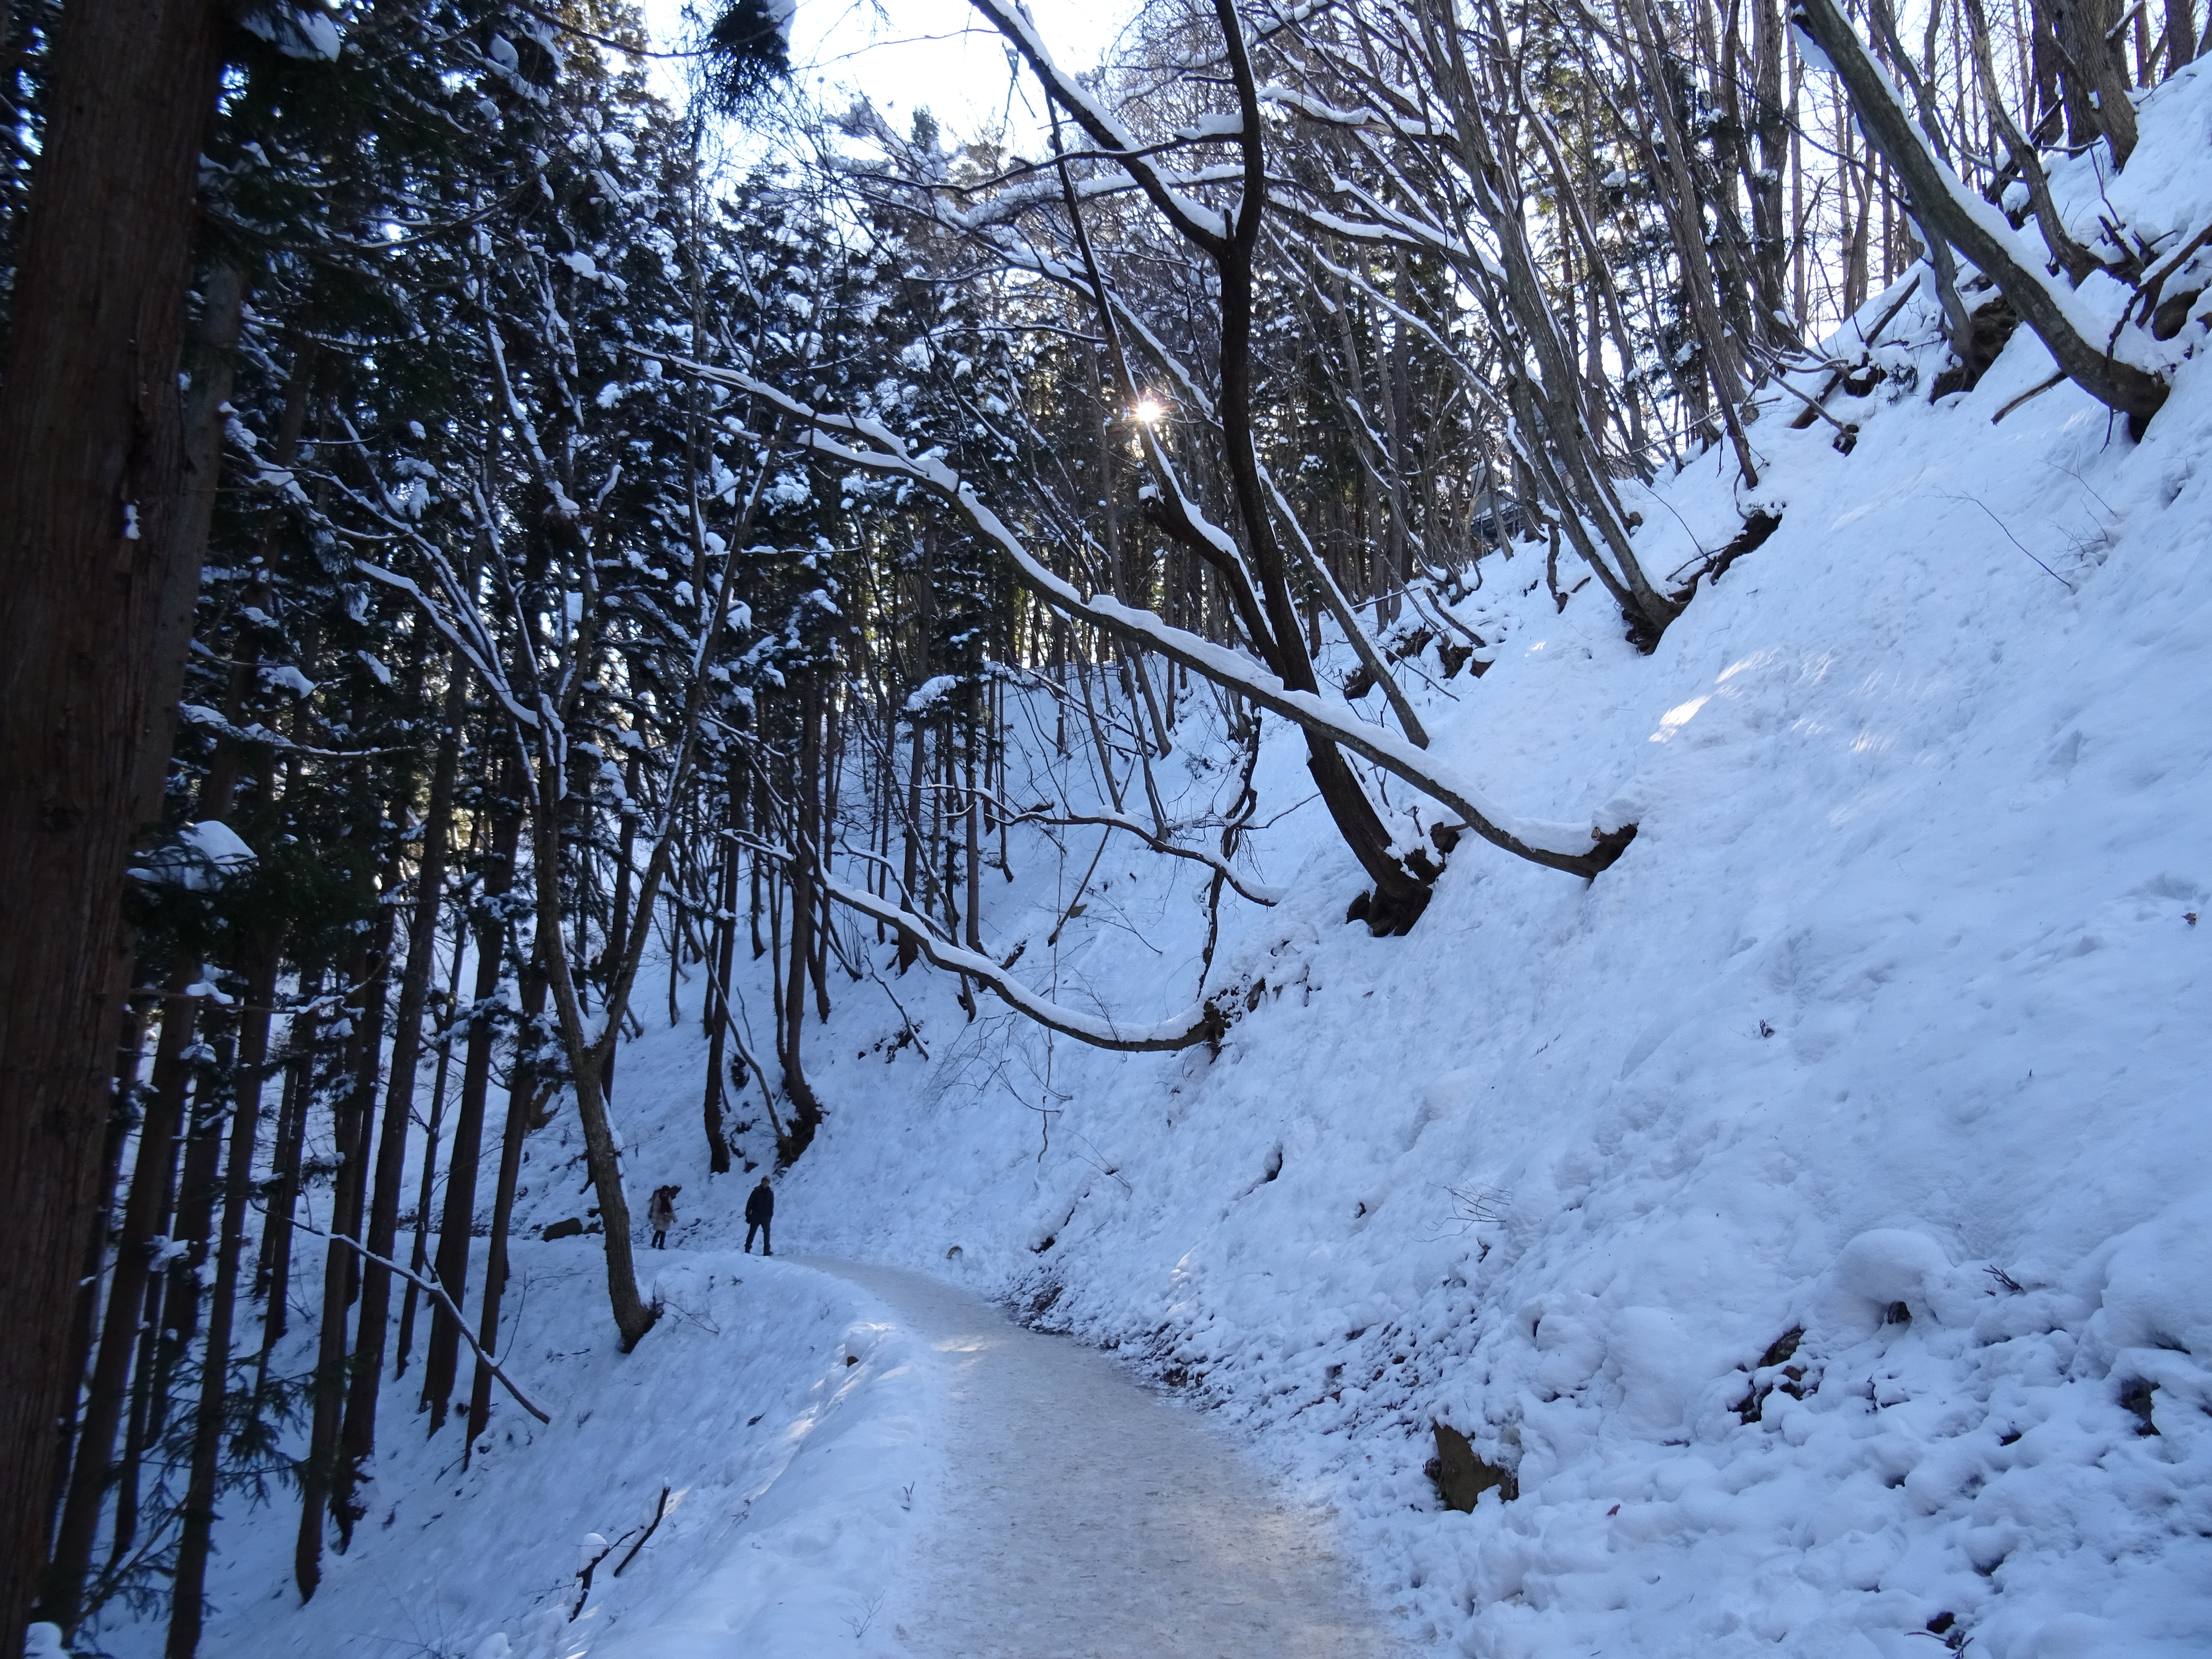 Visiting snow monkey park Jigokudani from Tokyo